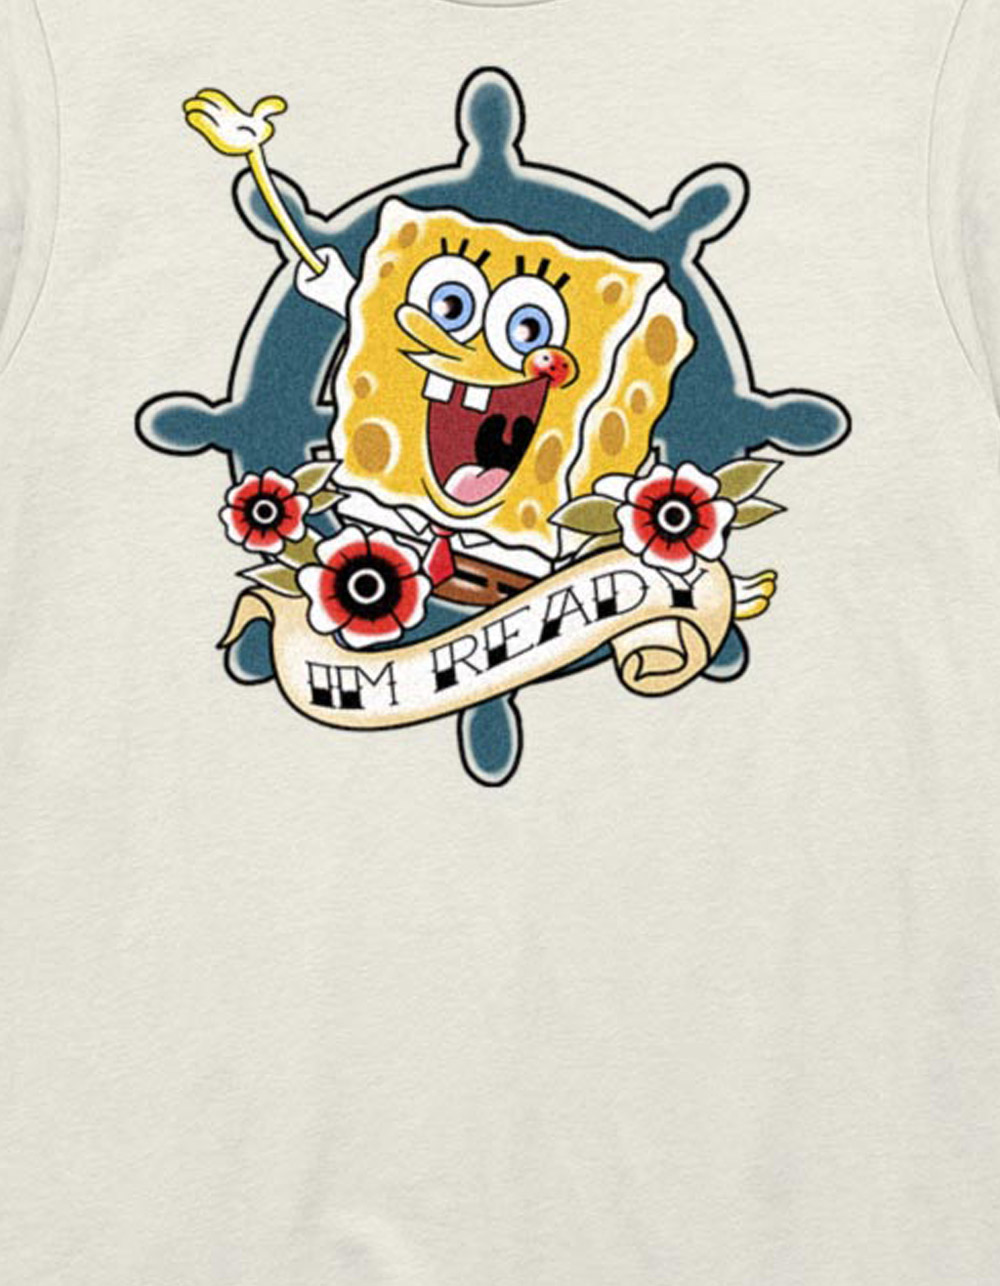 Spongebob and Patrick Star tattoo on the left inner